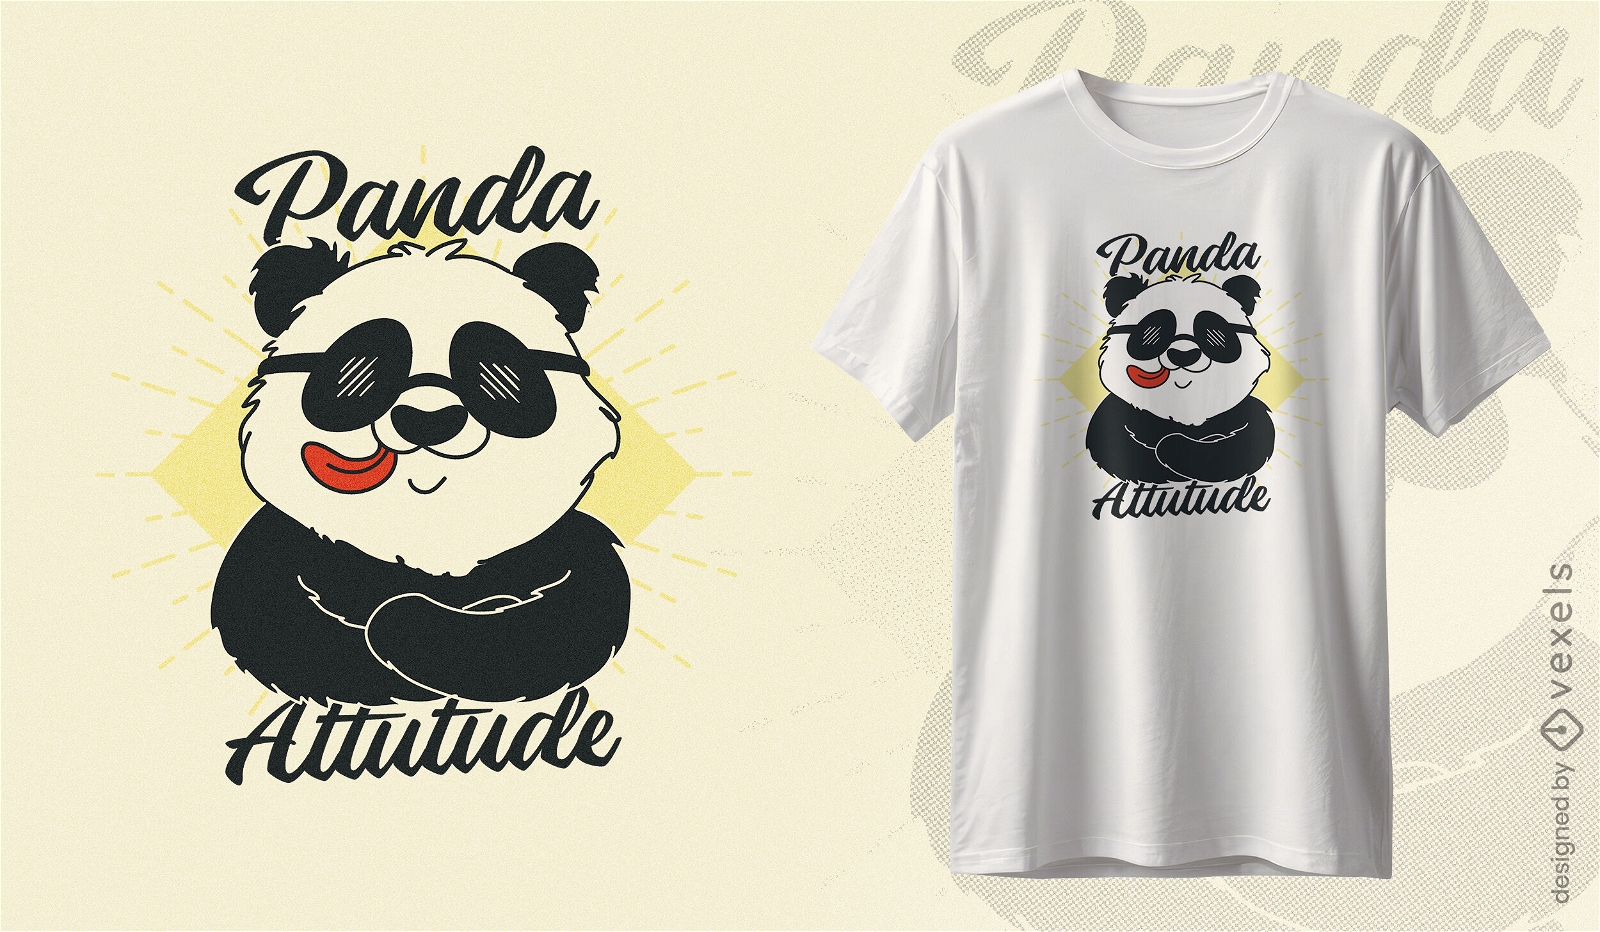 T-Shirt-Design mit Panda-Attit?de